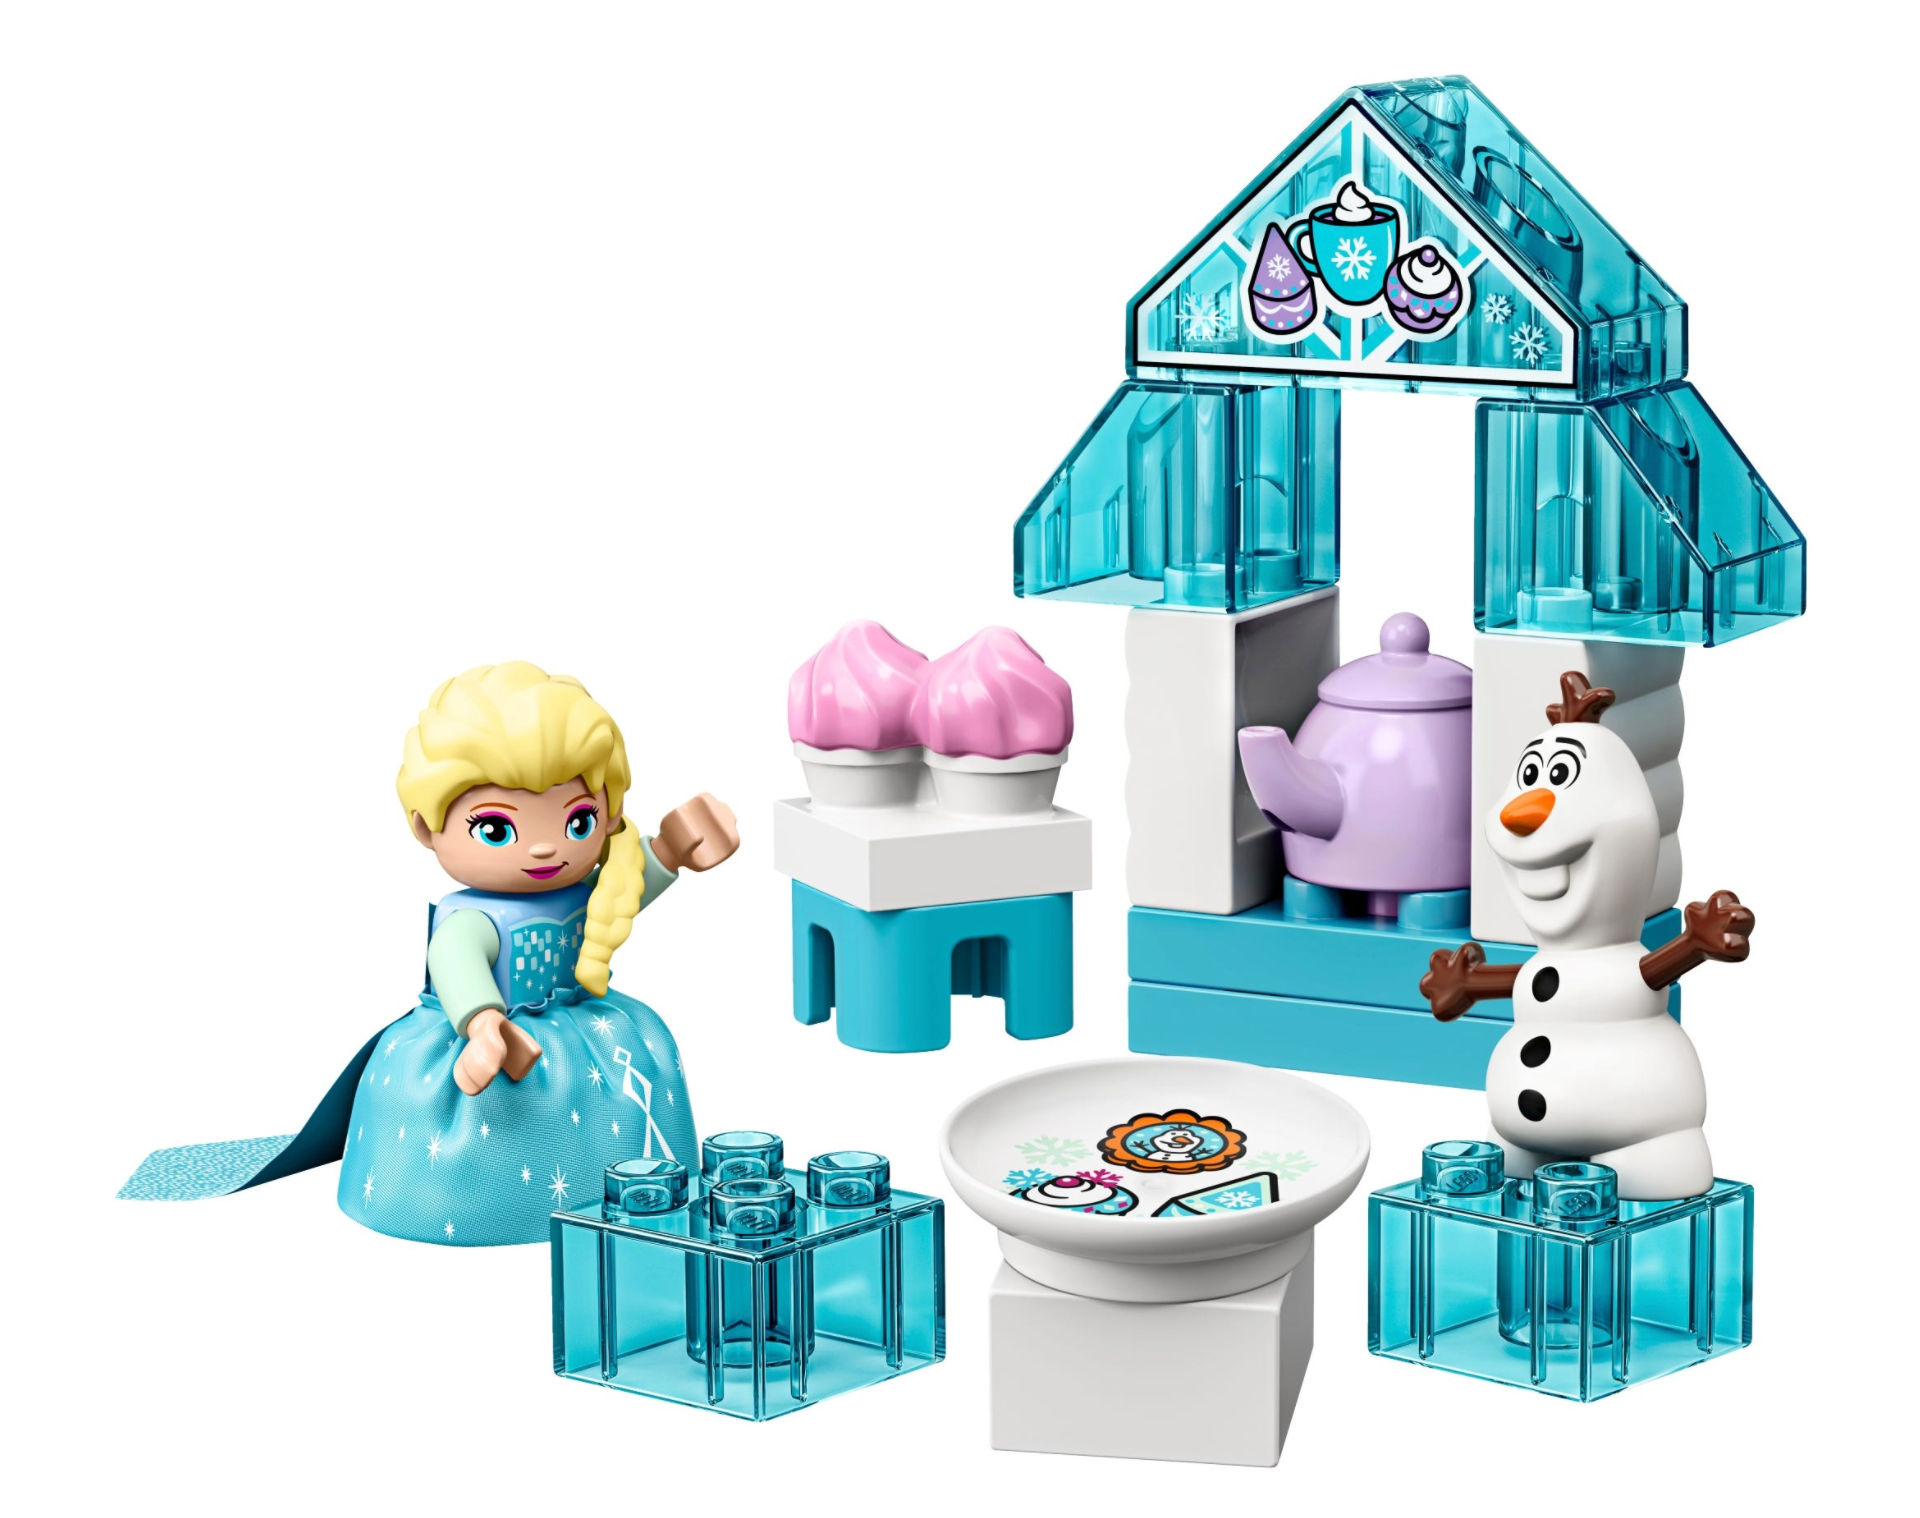 LEGO: DUPLO - Elsa and Olaf's Tea Party